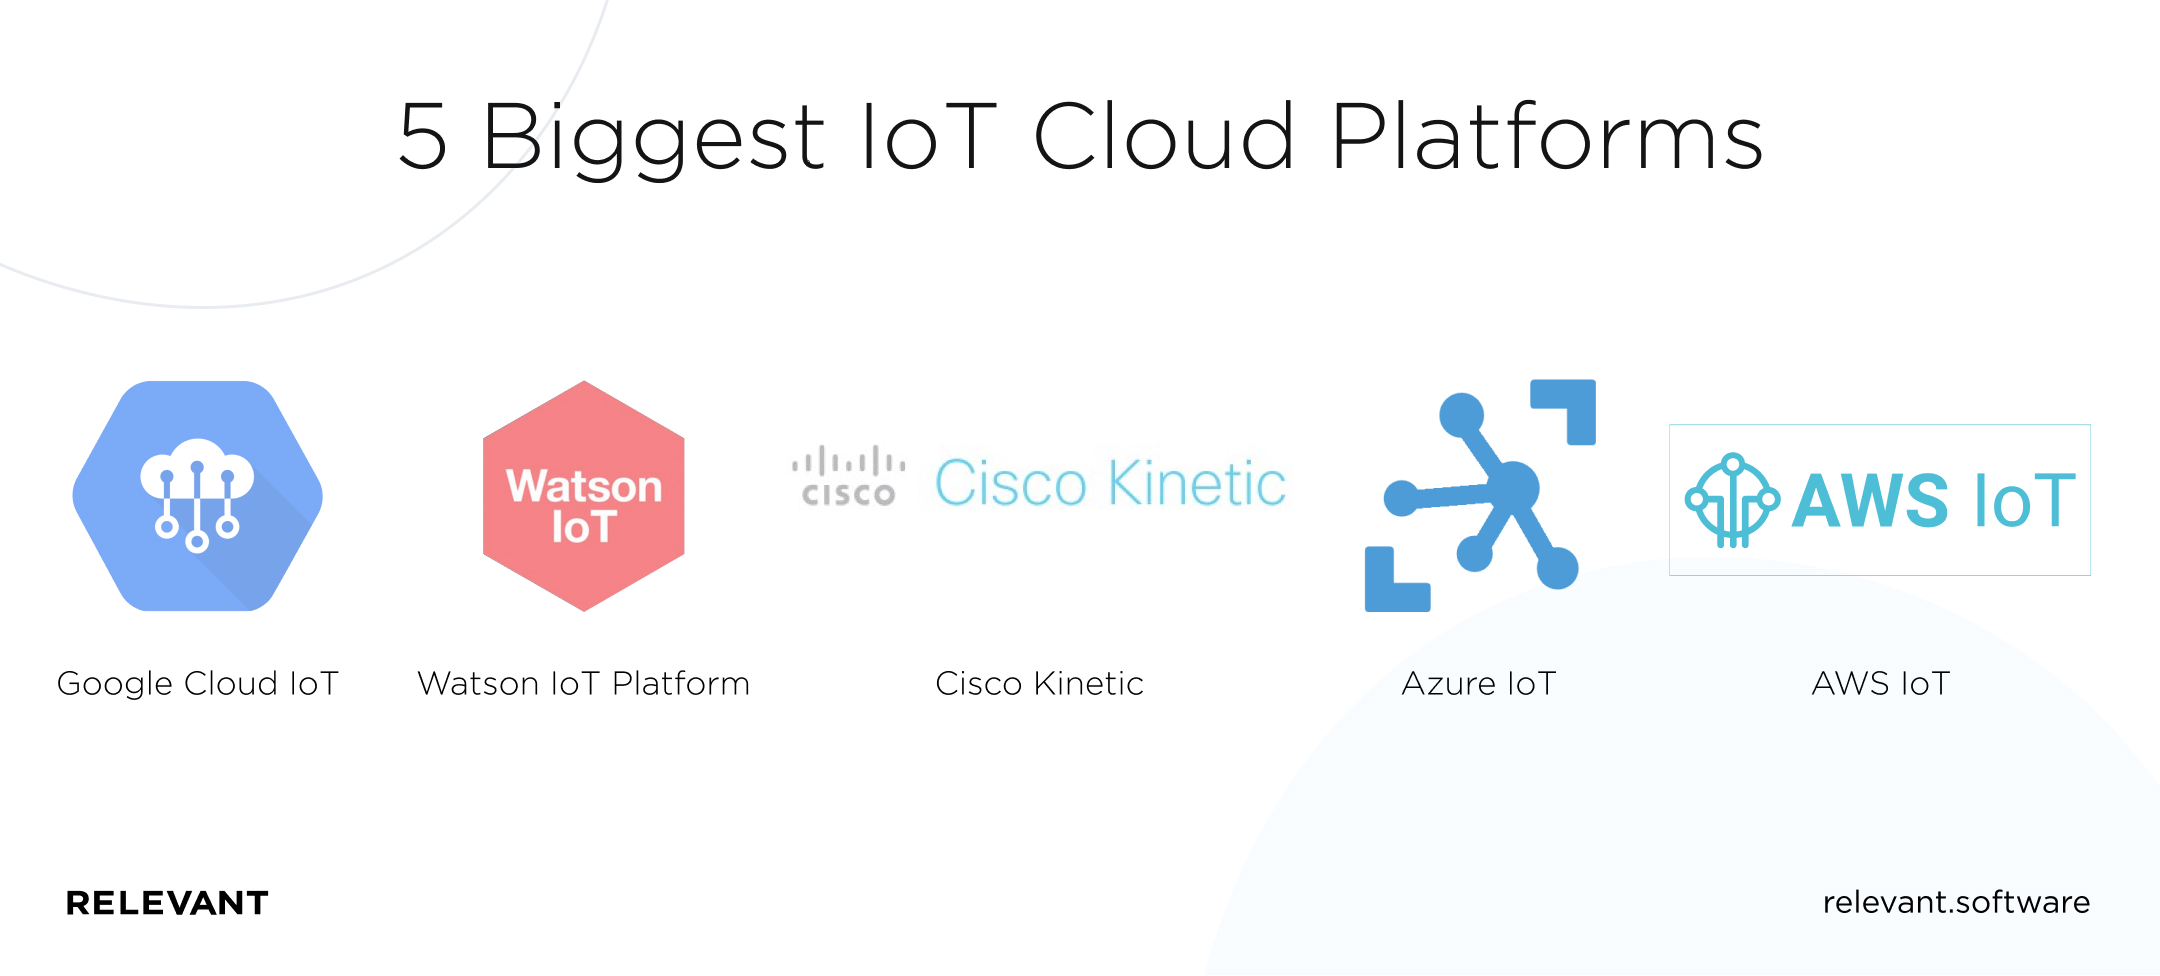 5 Biggest IoT Cloud Platforms